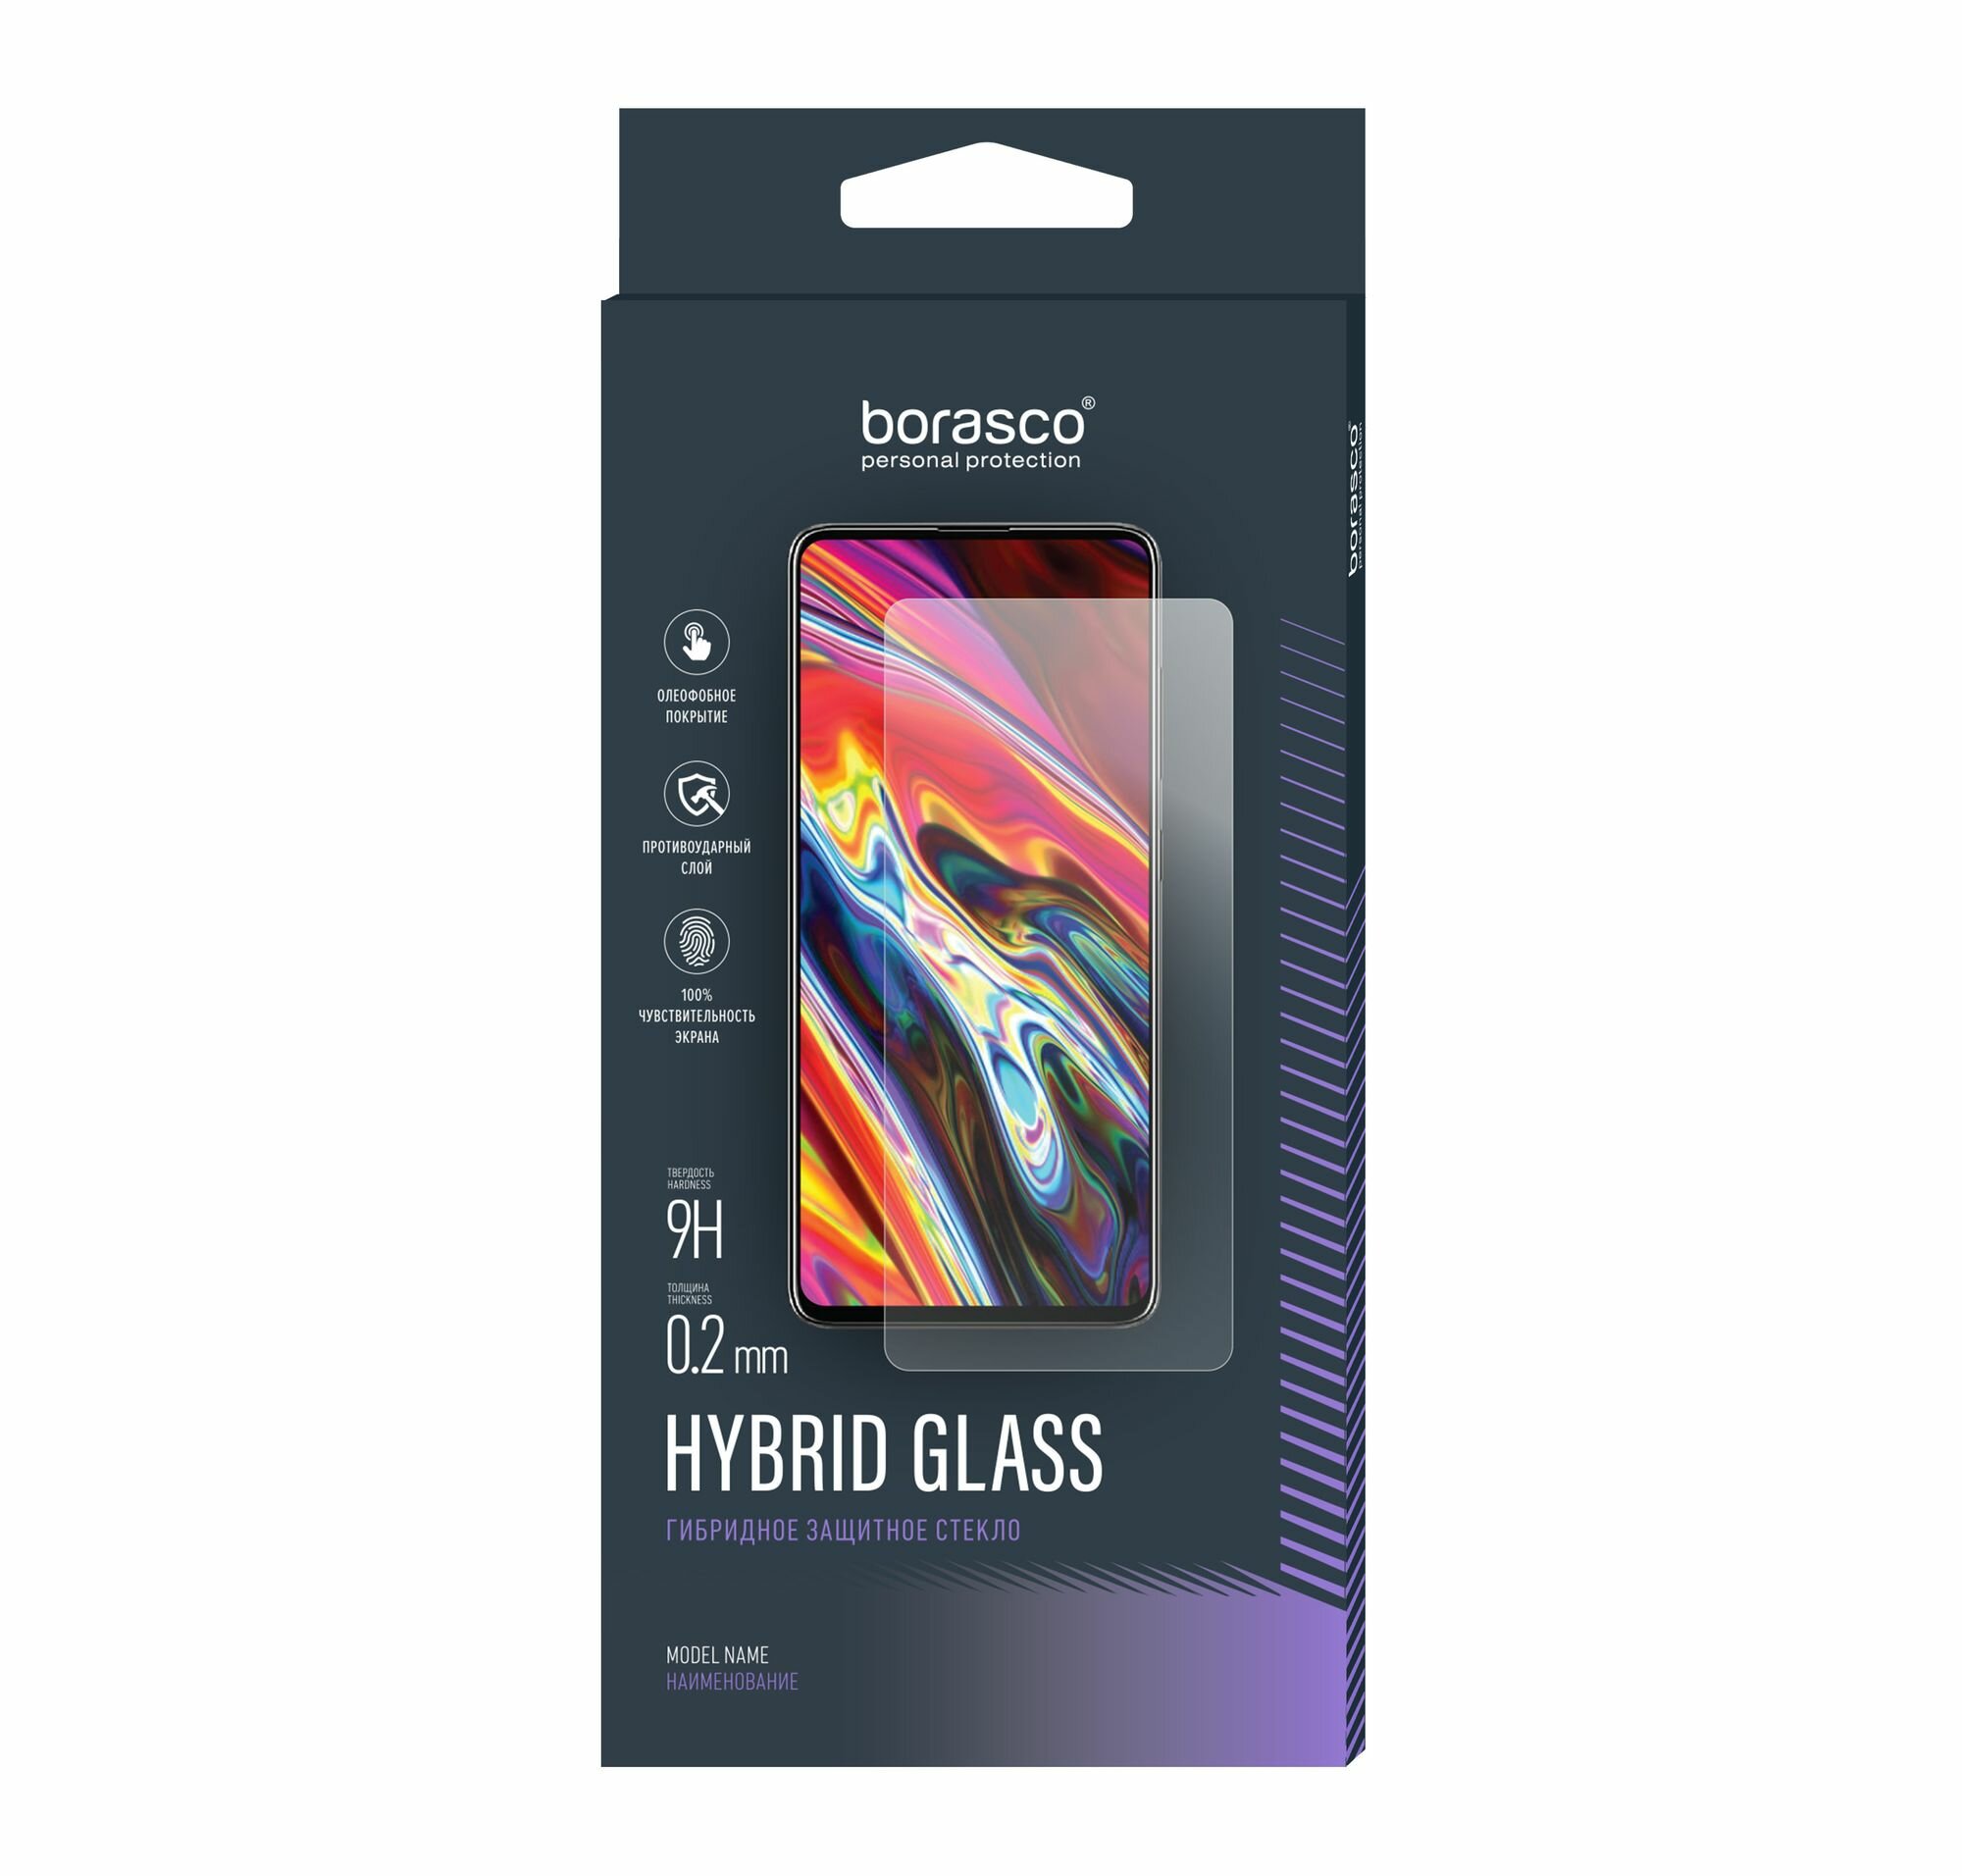 Стекло защитное Hybrid Glass VSP 026 мм для Sony Xperia Z5 Compact